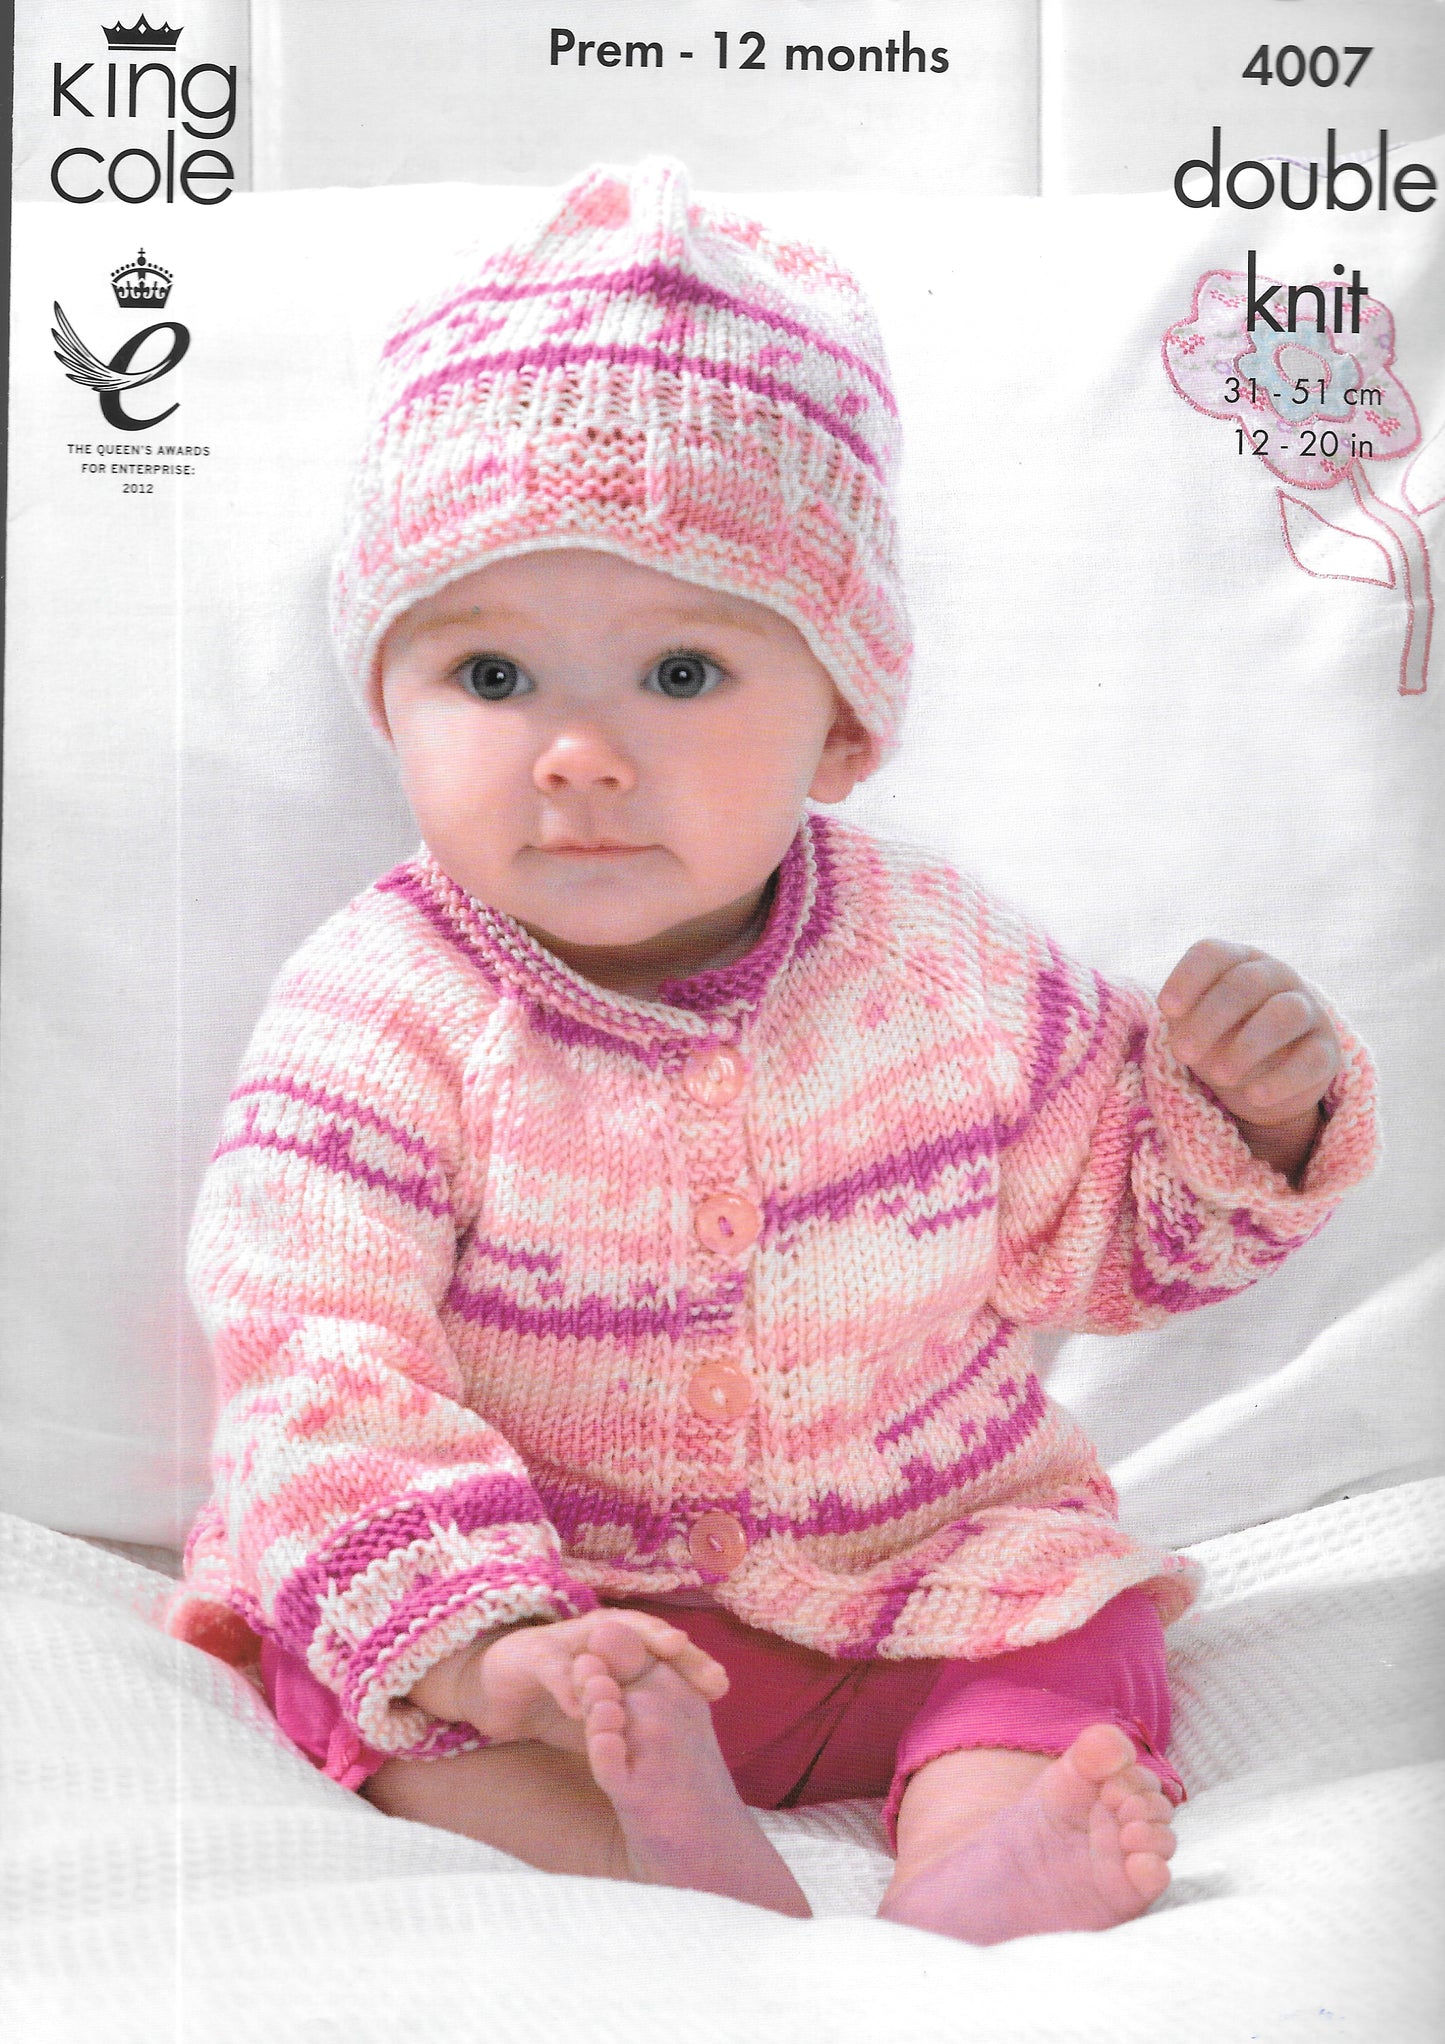 4007 King Cole Knitting Pattern. Blanket/Jacket/Cardigan/Hat. Double Knit